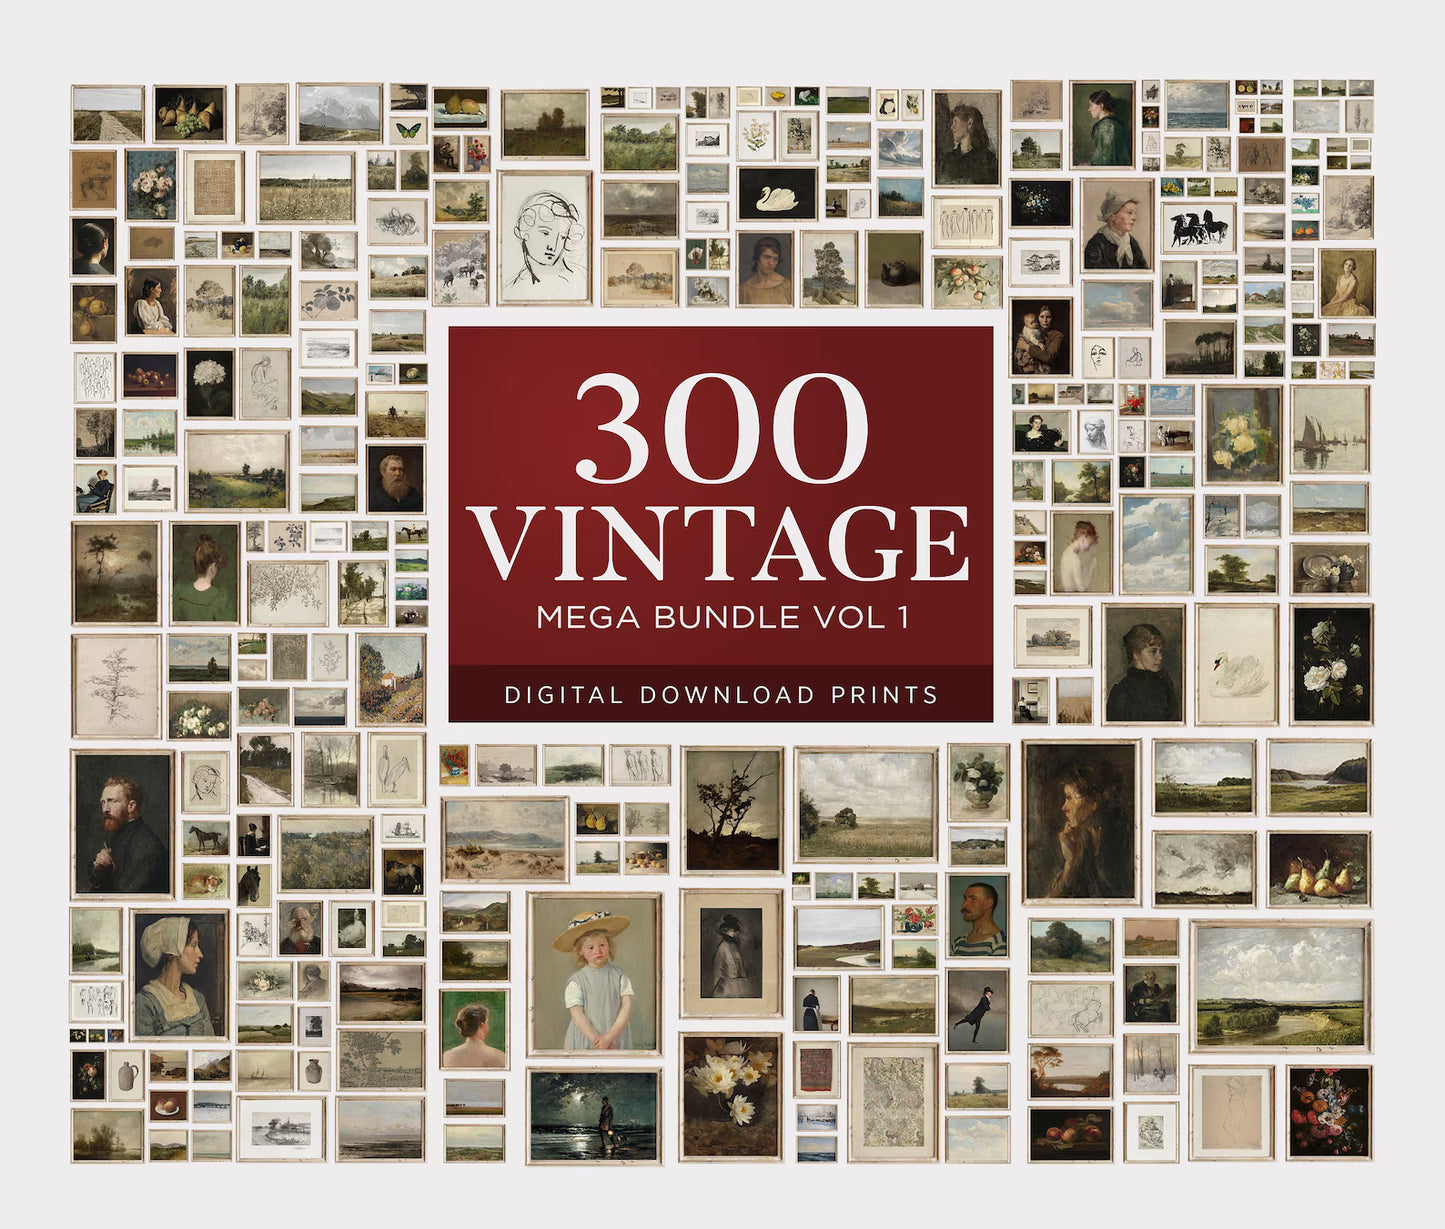 Gallery Wall Set of 300 Vintage Print MEGA BUNDLE